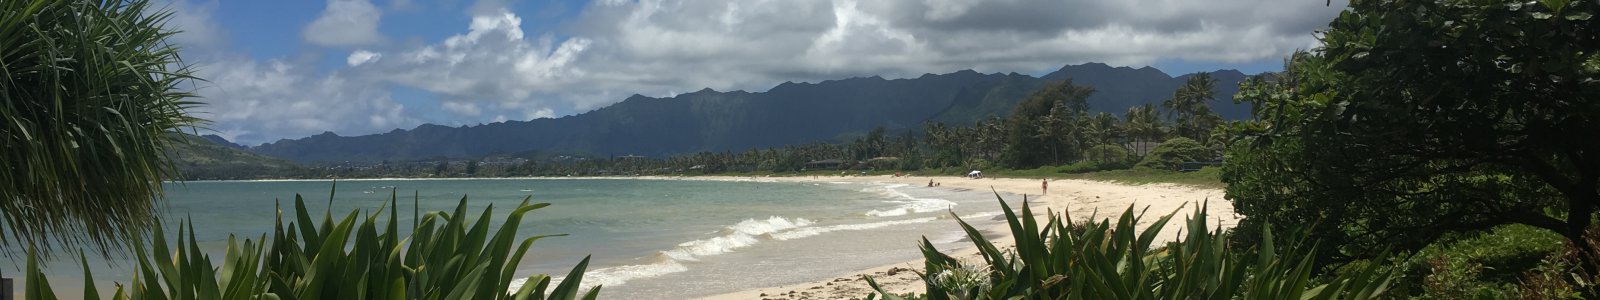 Six Hawaii Traveler Precautions